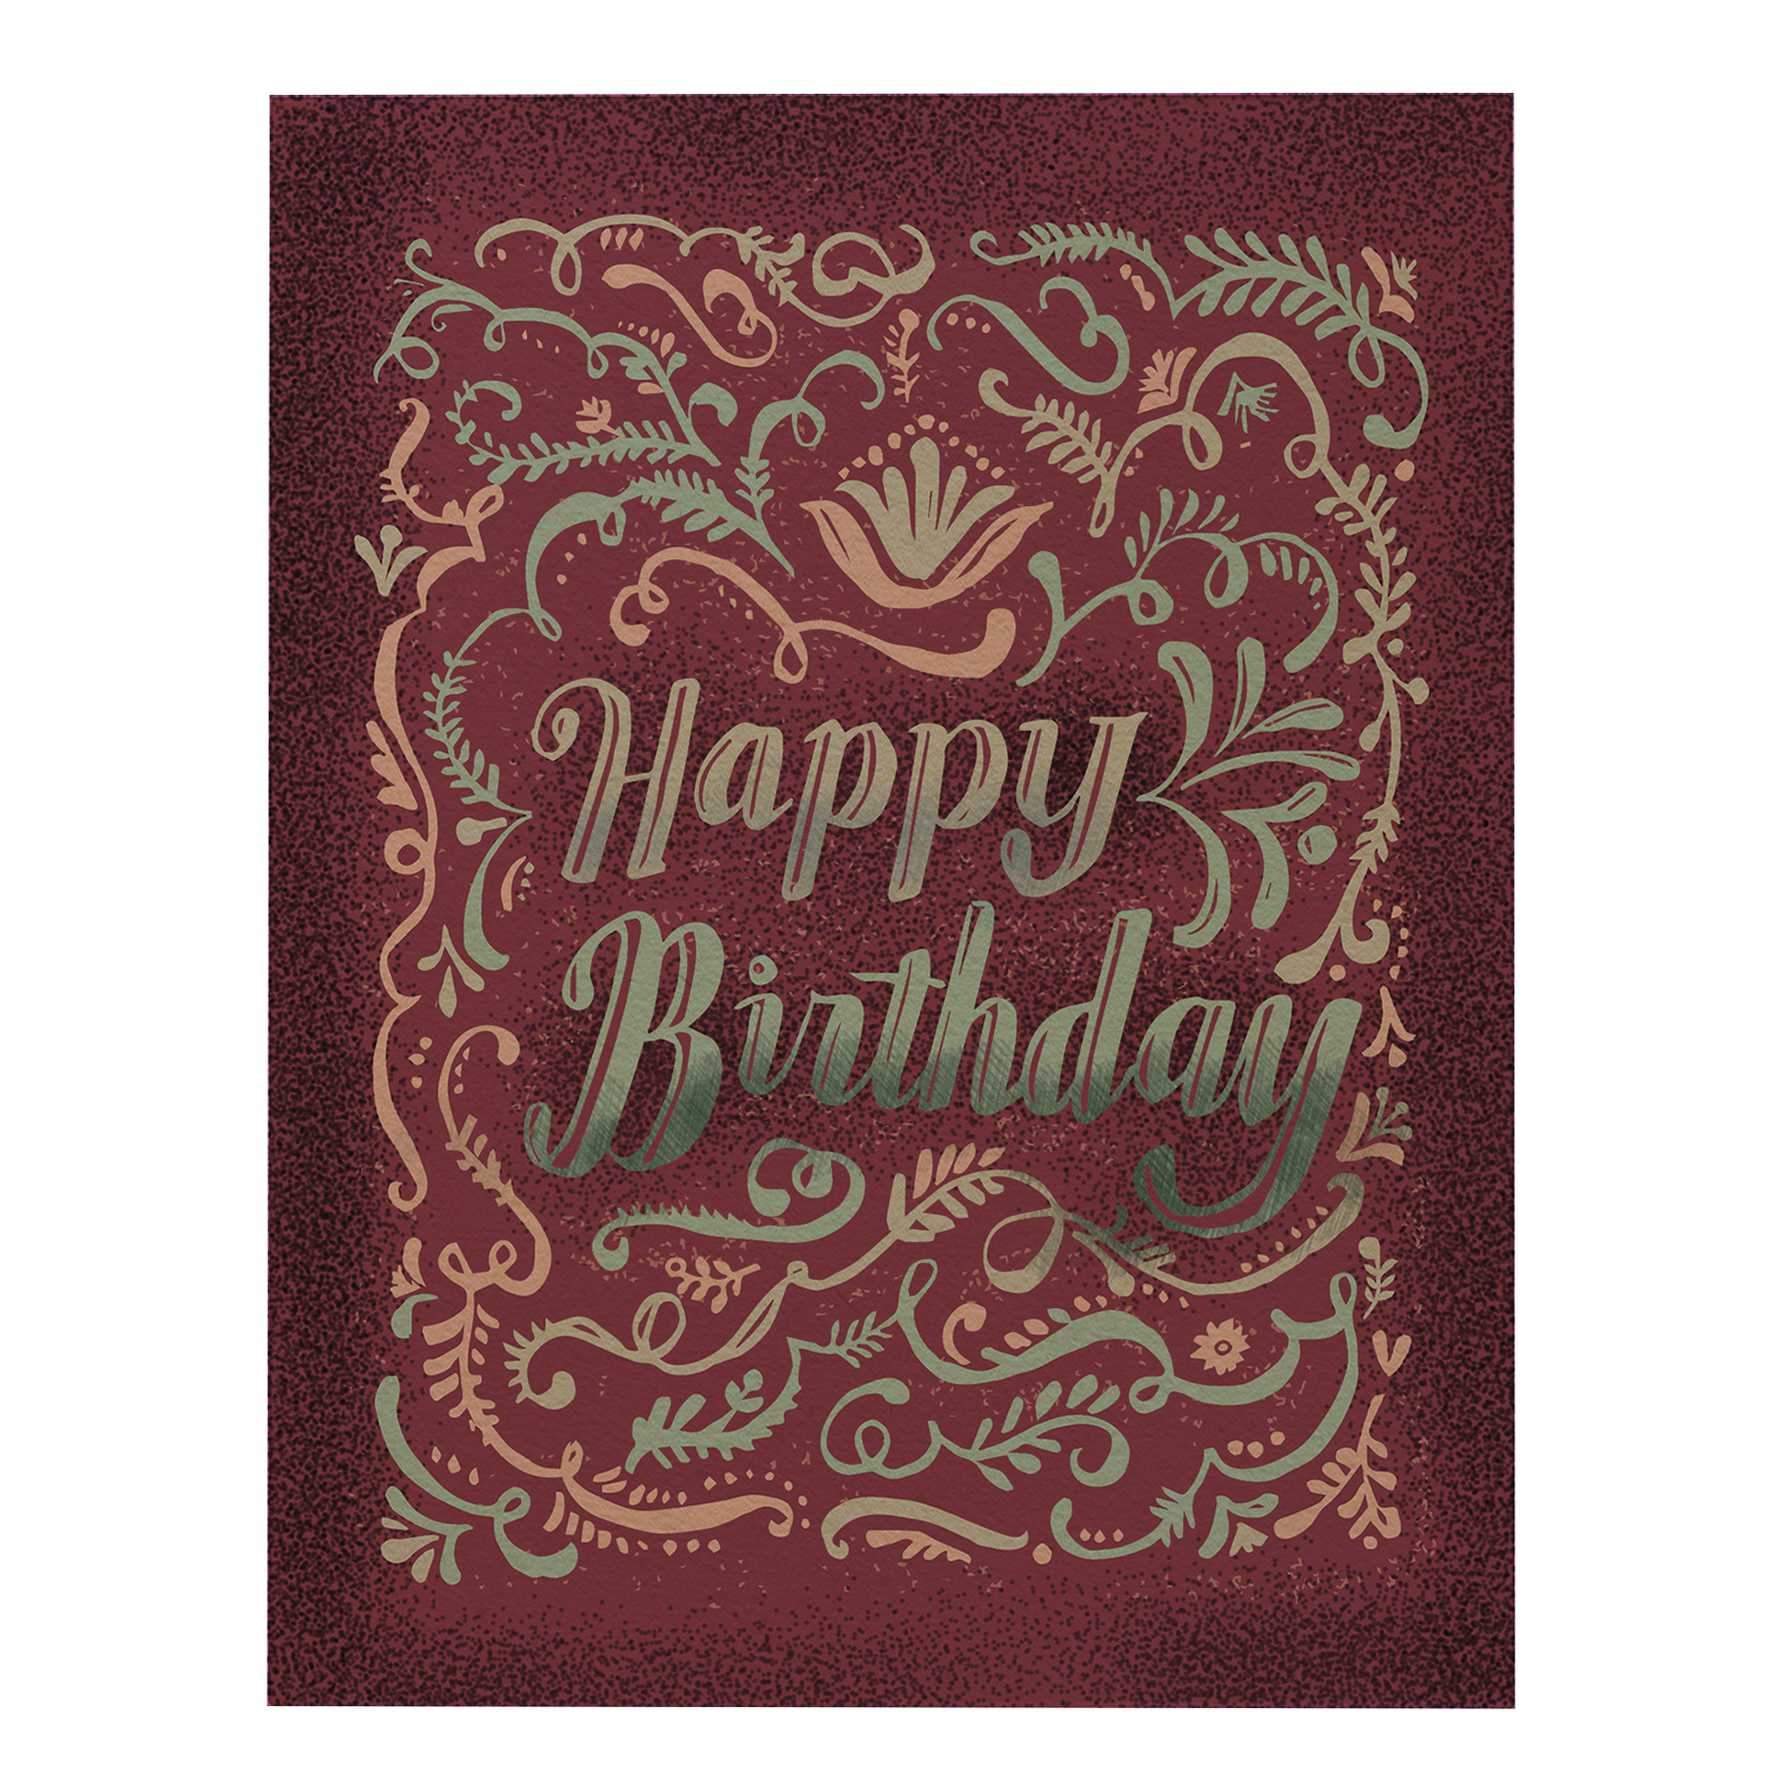 Happy Birthday Big Greeting Card: Flourish